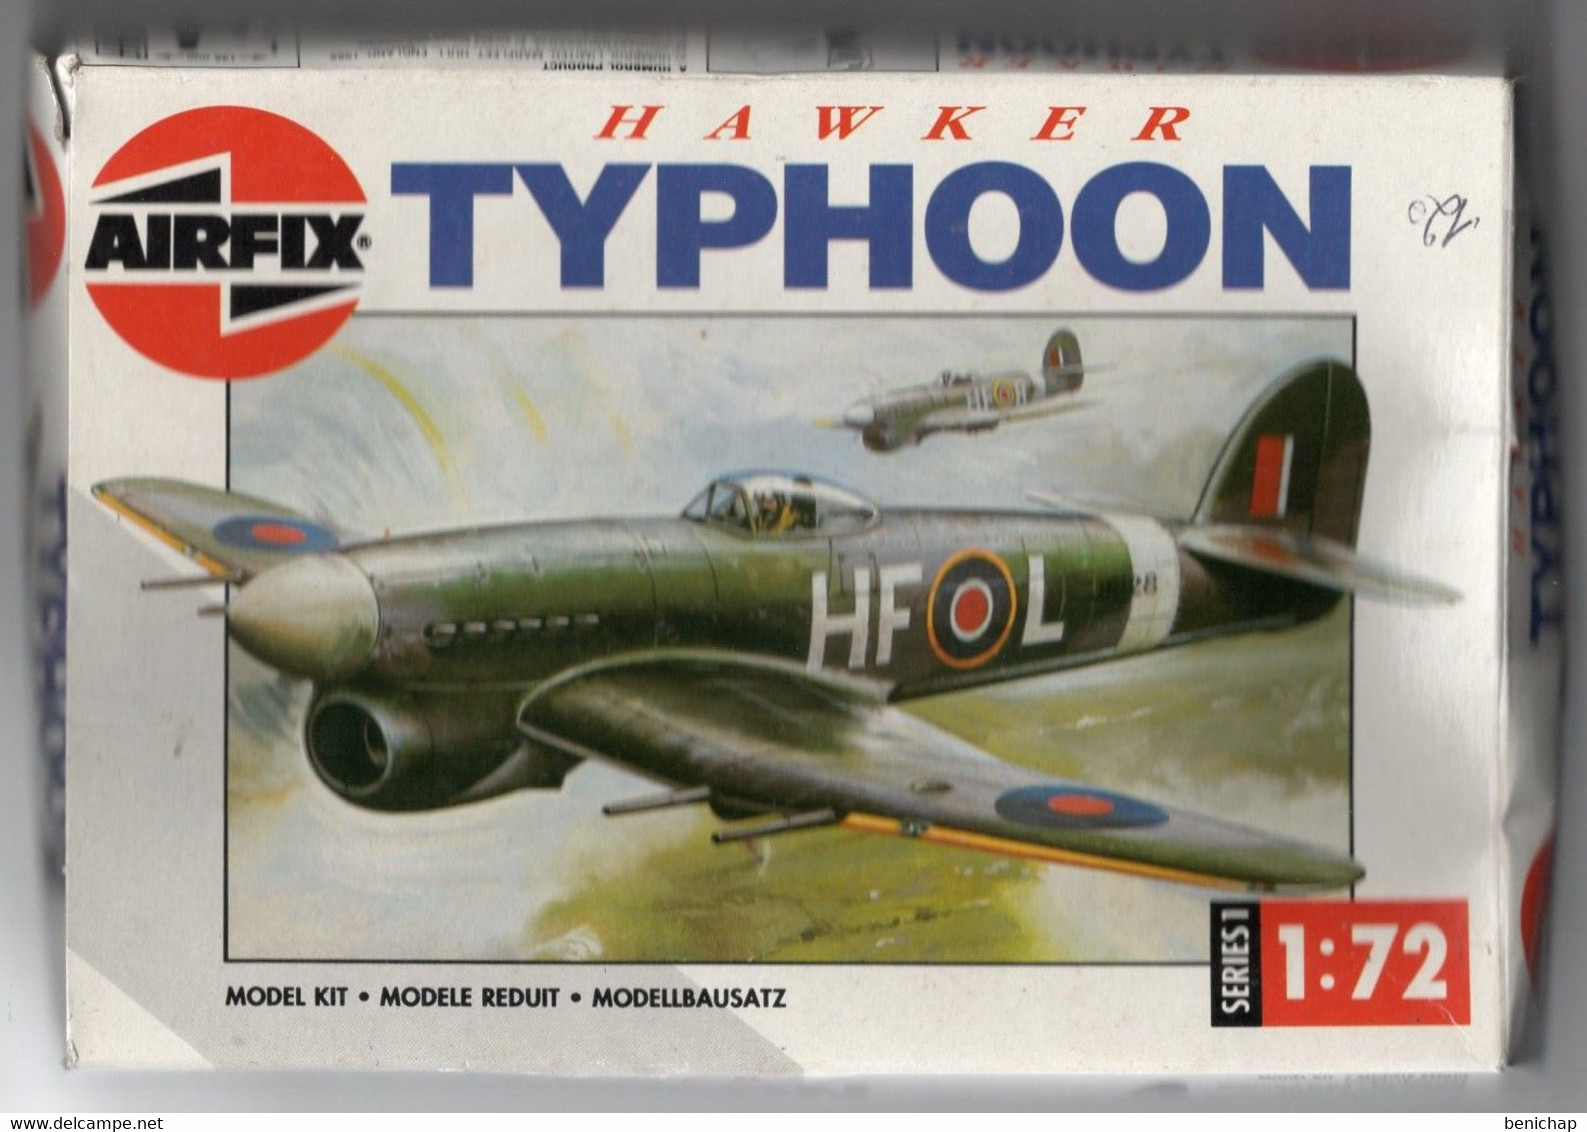 AIRFIX - HAWKER TYPHON 1B - 183 SQN. RAF, 1943 - SERIE 1 - 1:72. - Avions